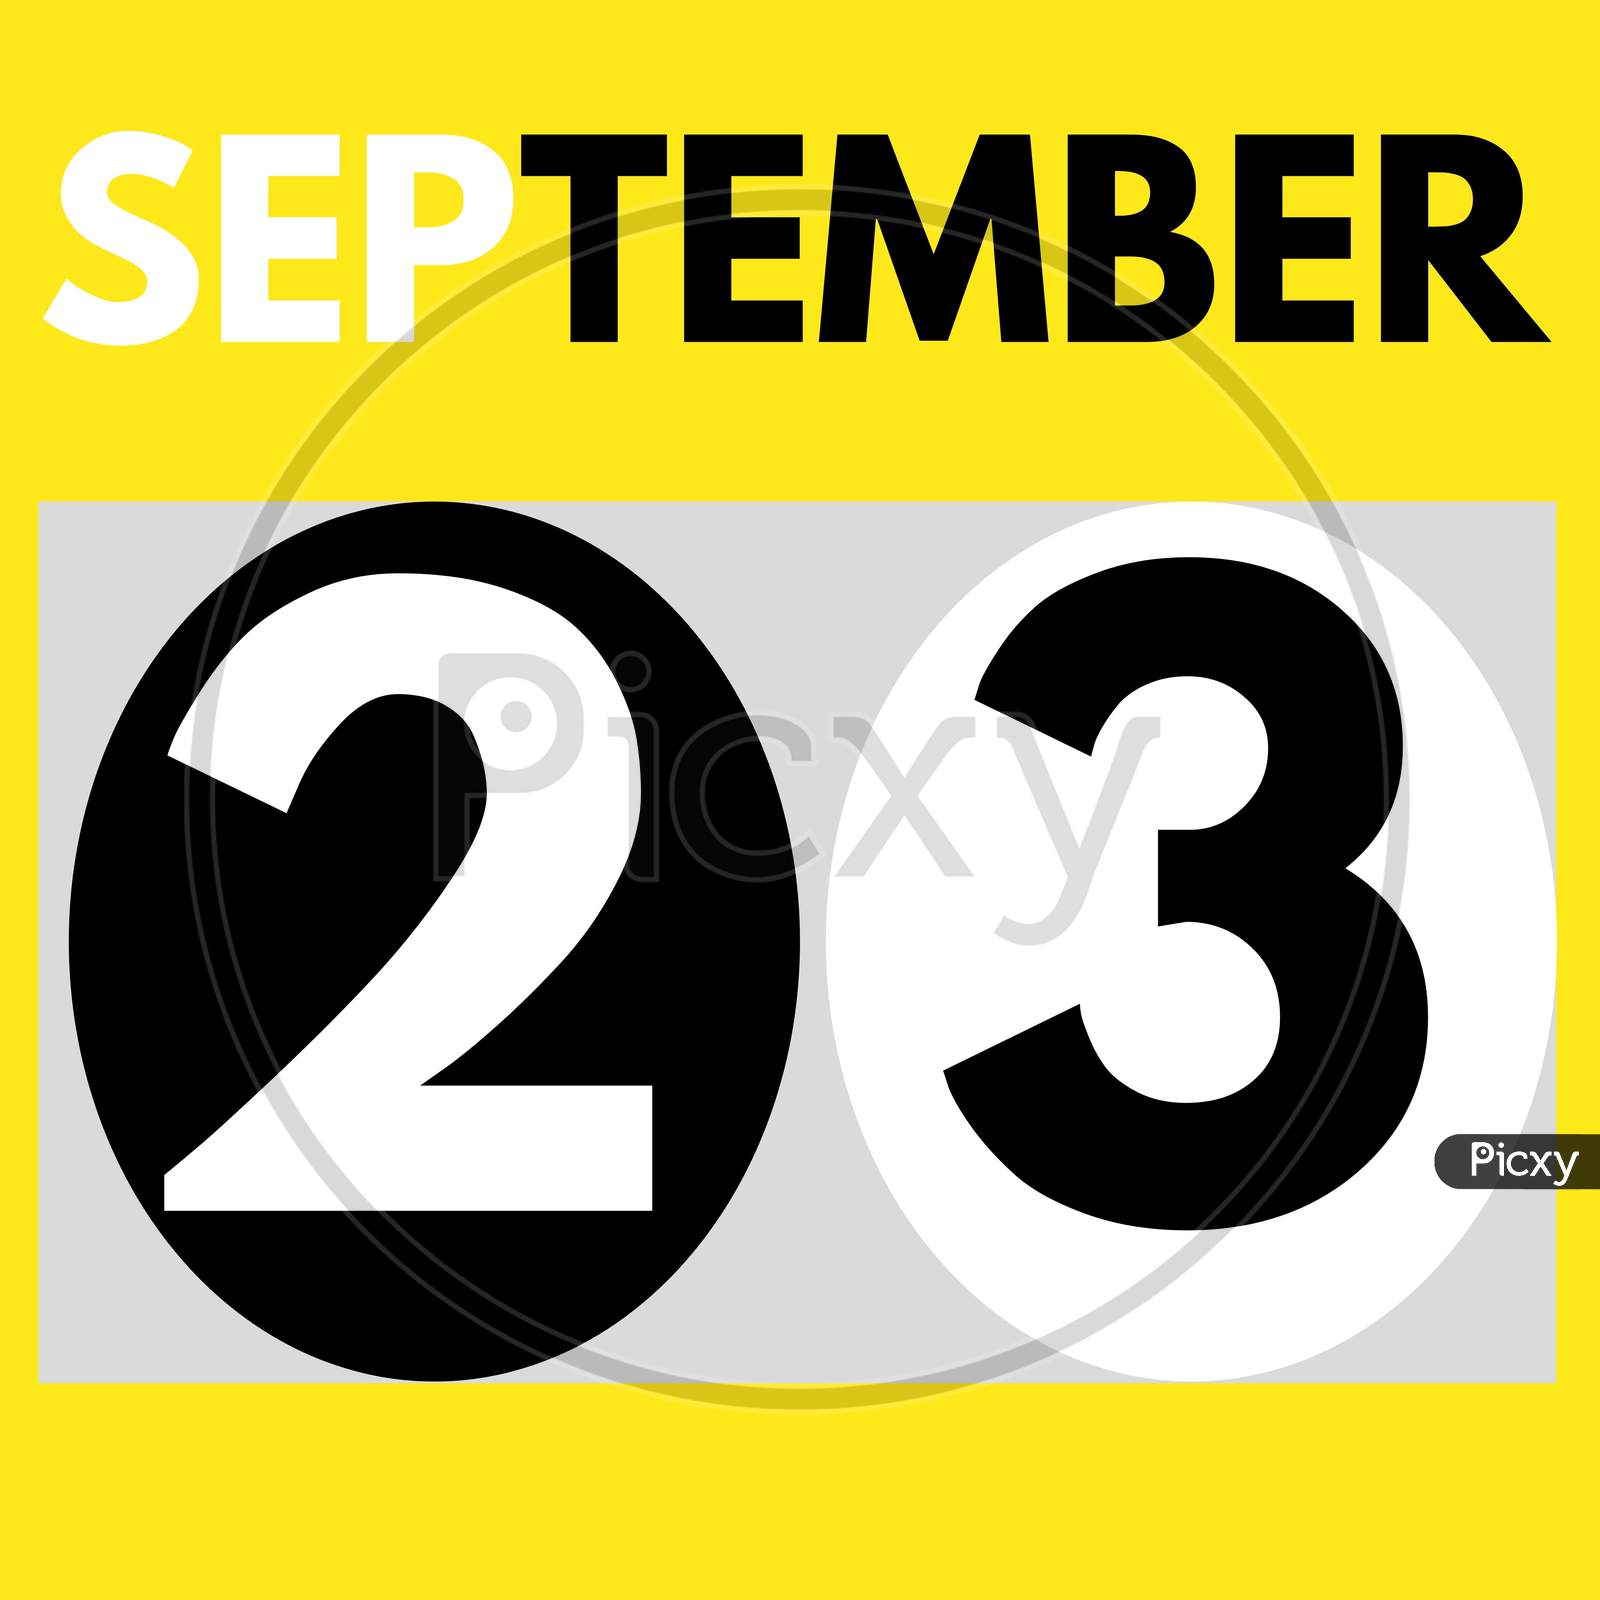 September 23 . Modern Daily Calendar Icon .Date ,Day, Month .Calendar For The Month Of September